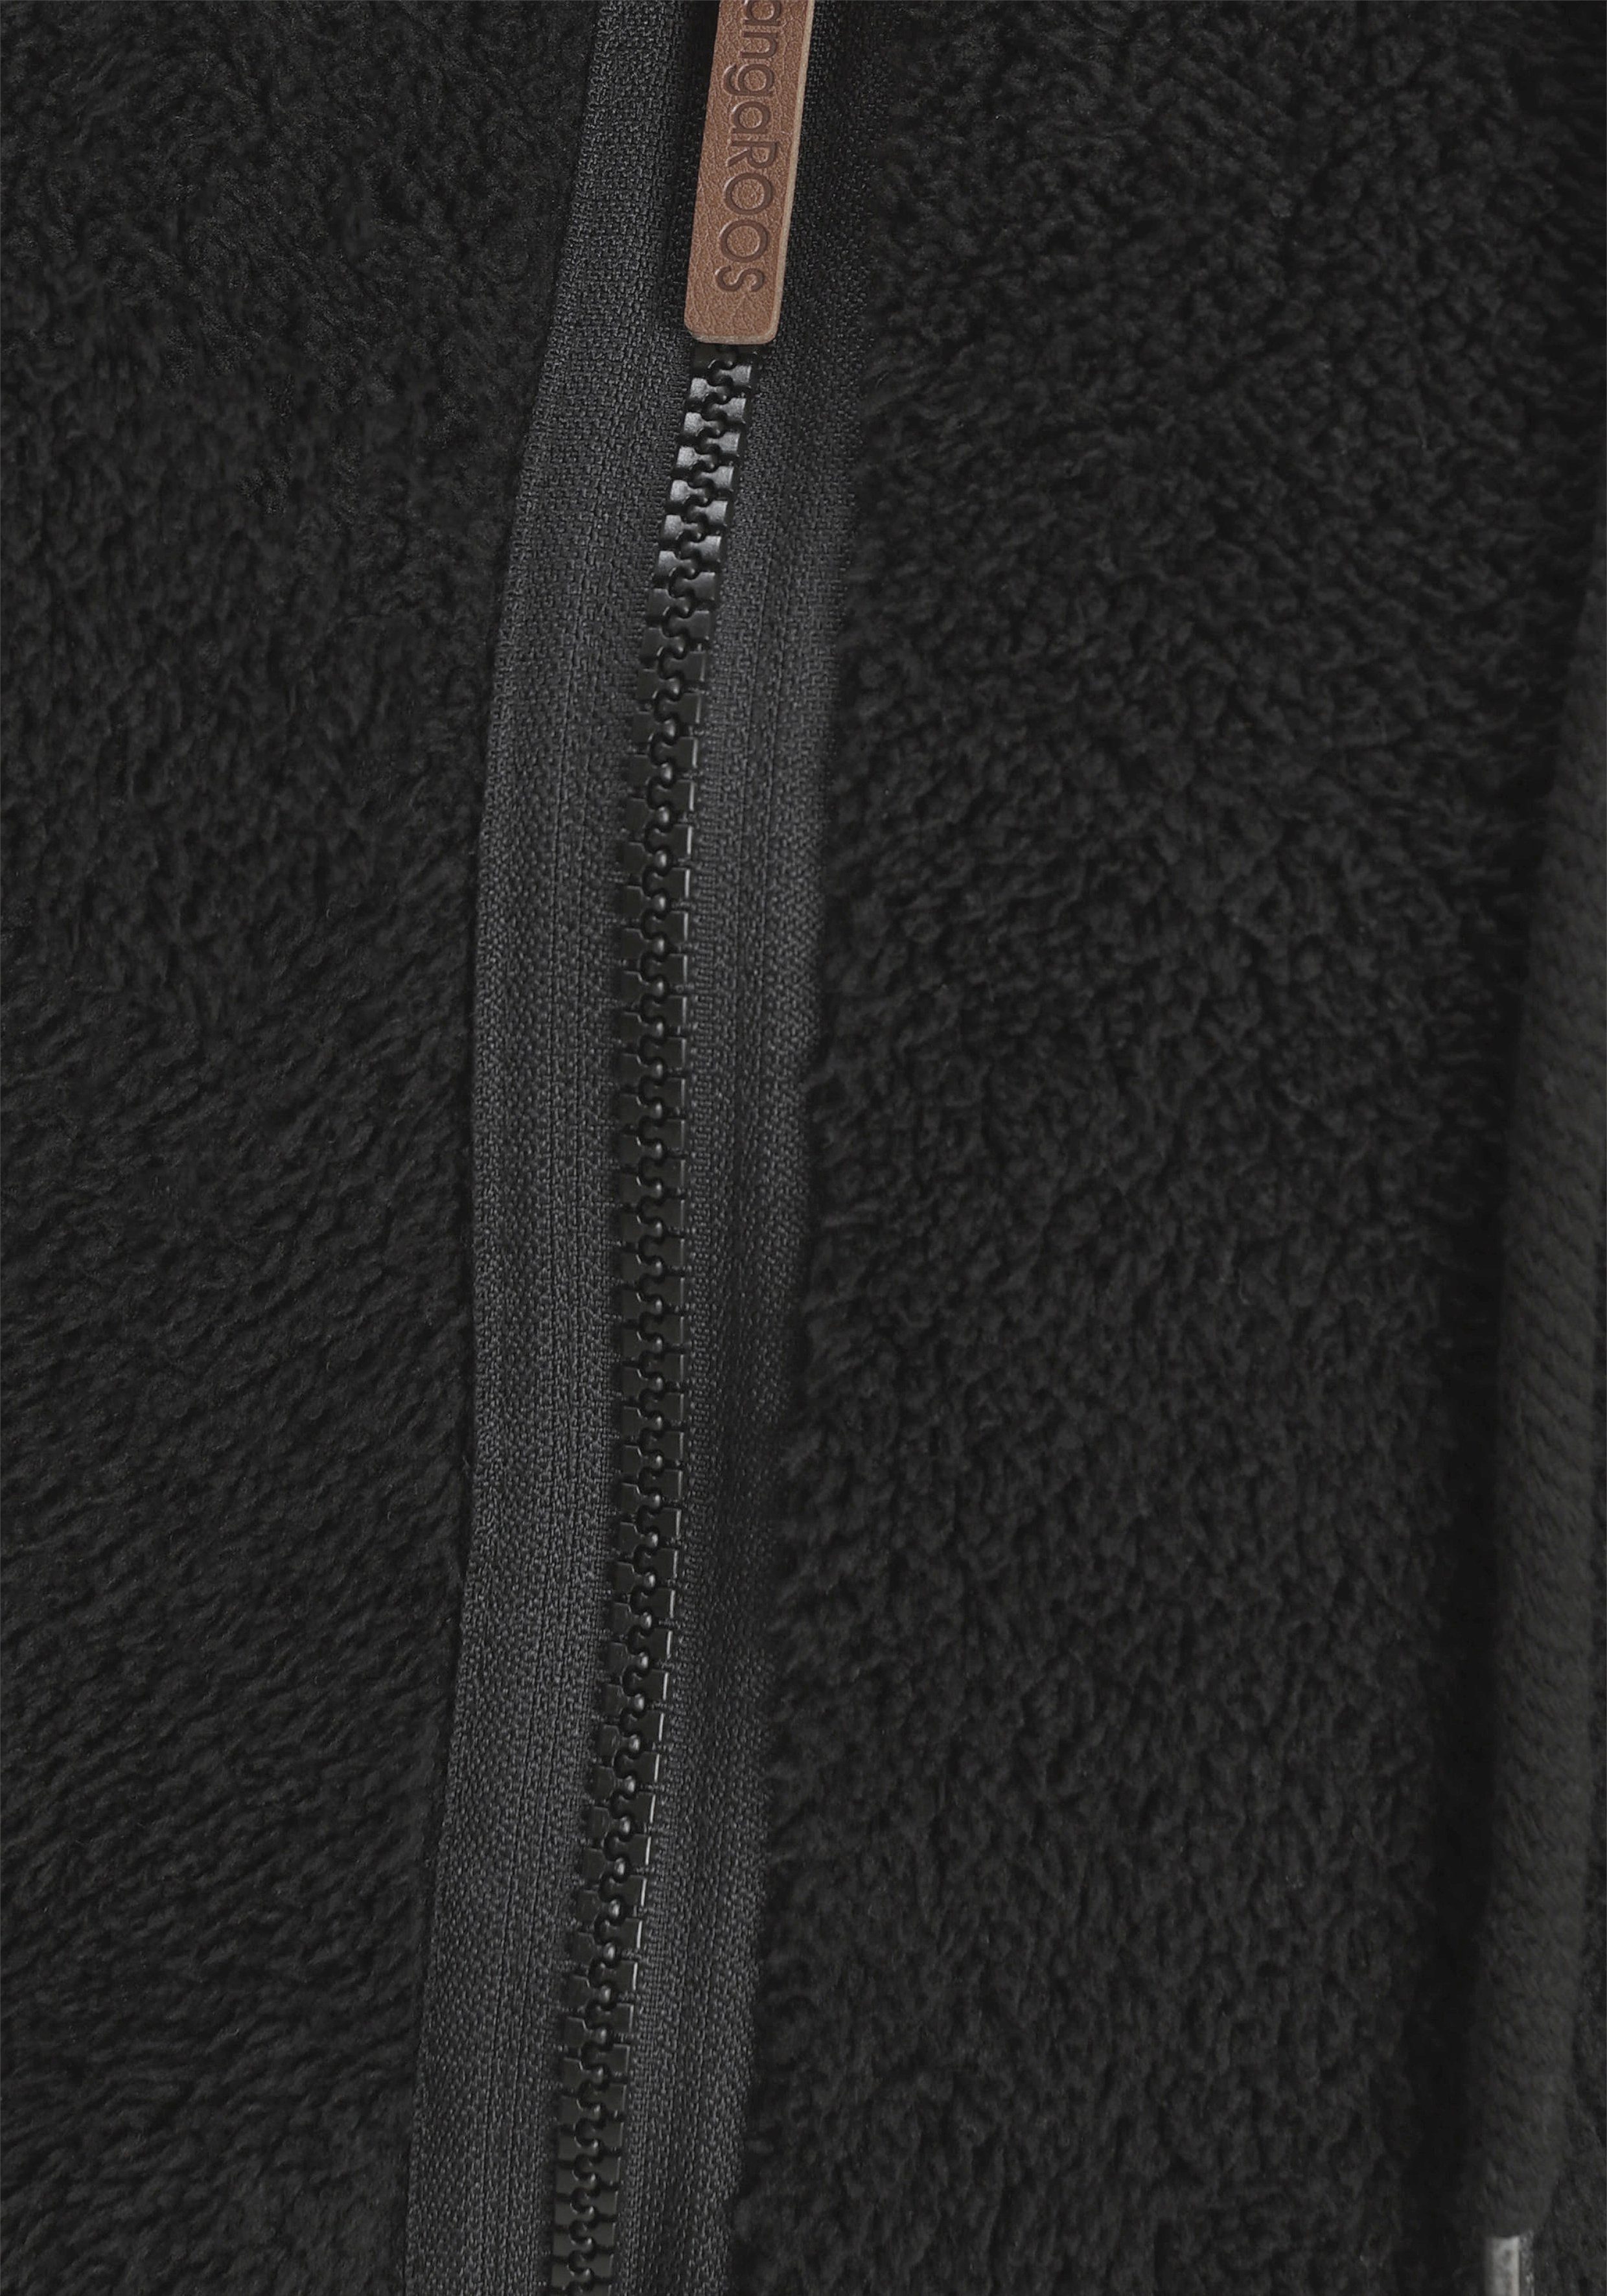 KangaROOS Sweatjacke aus flauschigem schwarz Teddy-Fleece